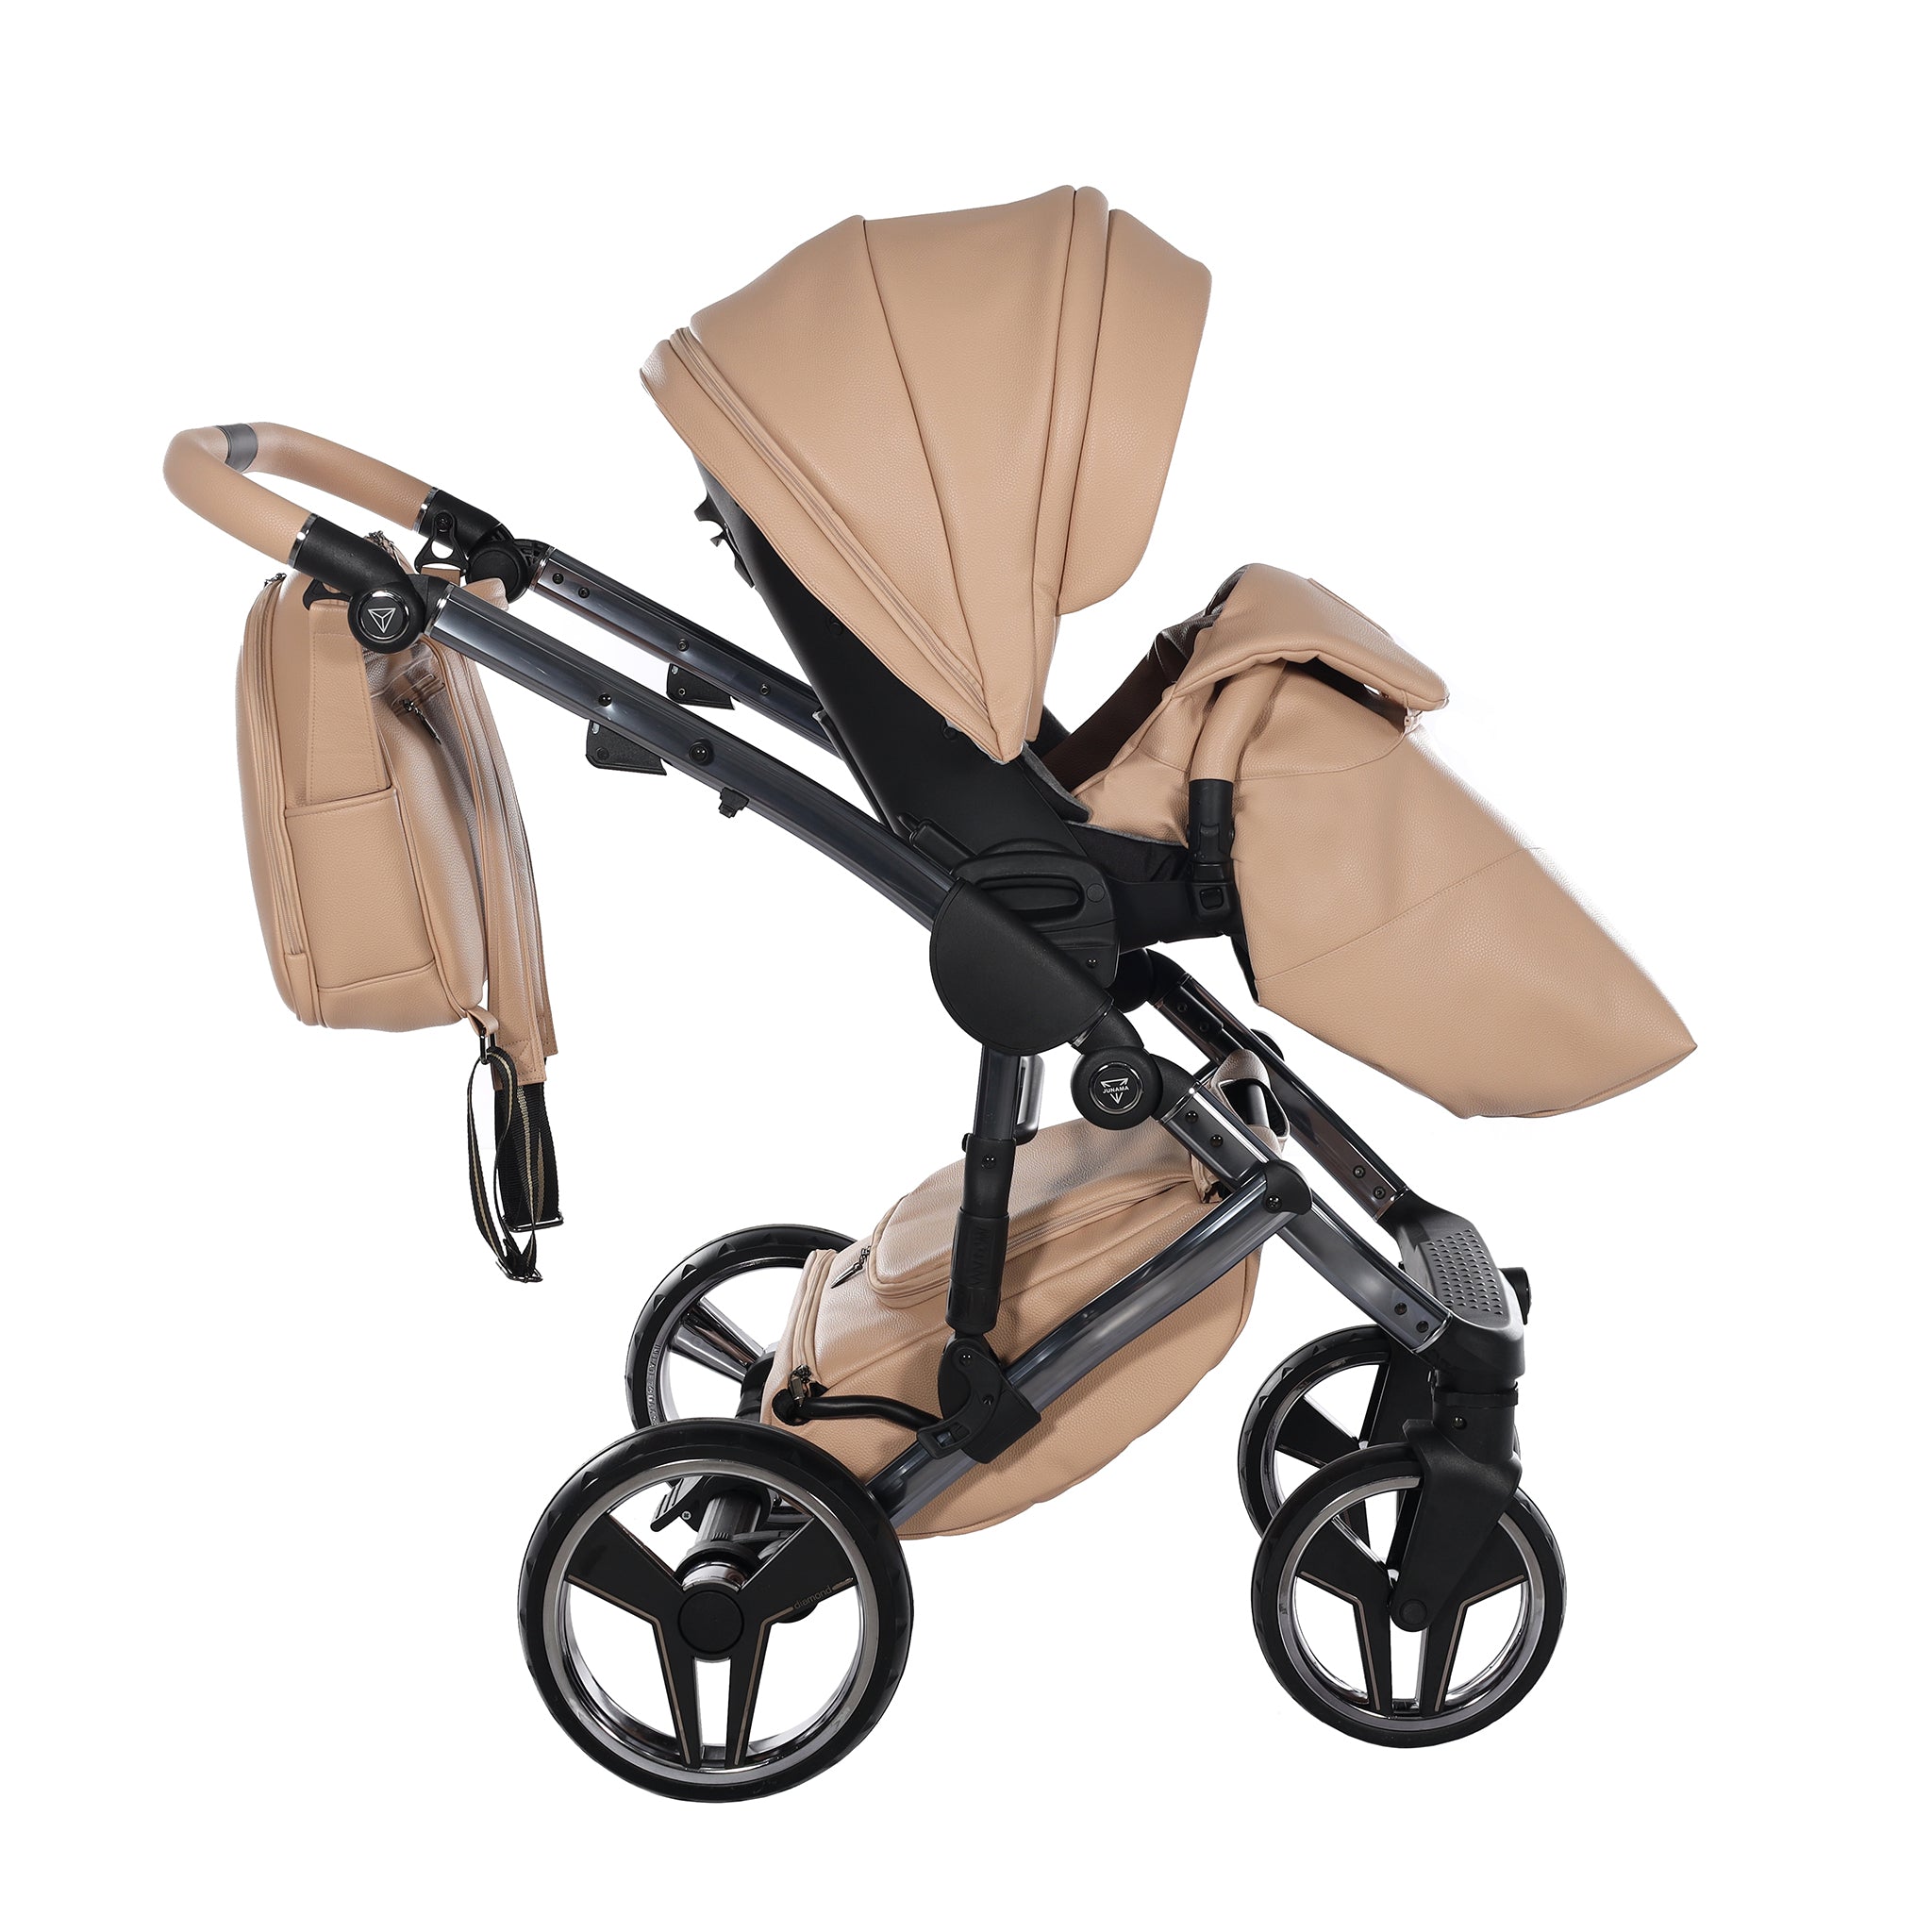 Junama Handcraft, baby prams or stroller 2 in 1 - Camel, number: JUNHC07